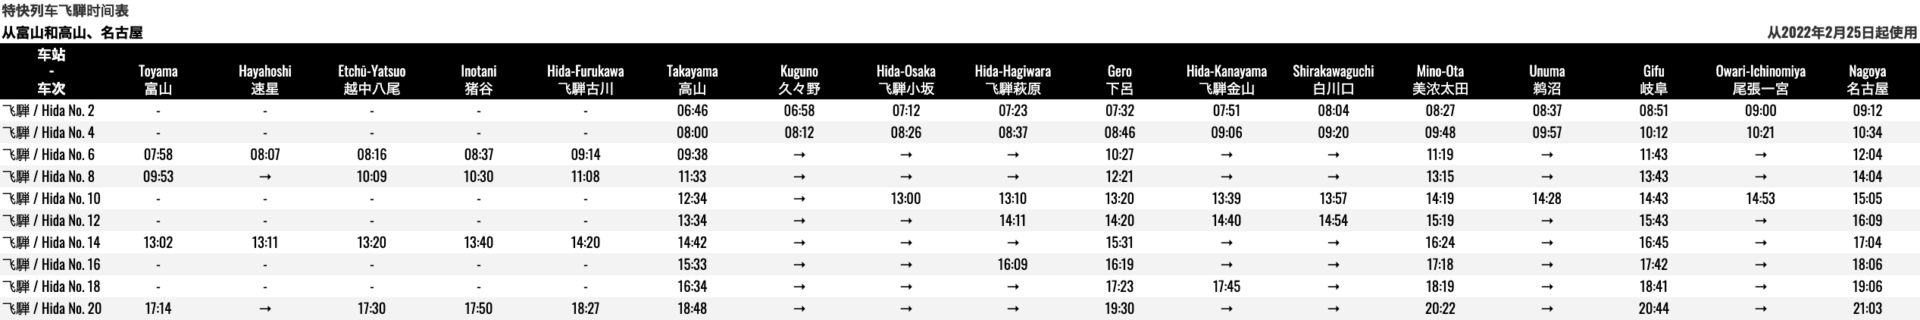 Hida-Takayama-Nagoya-timetable